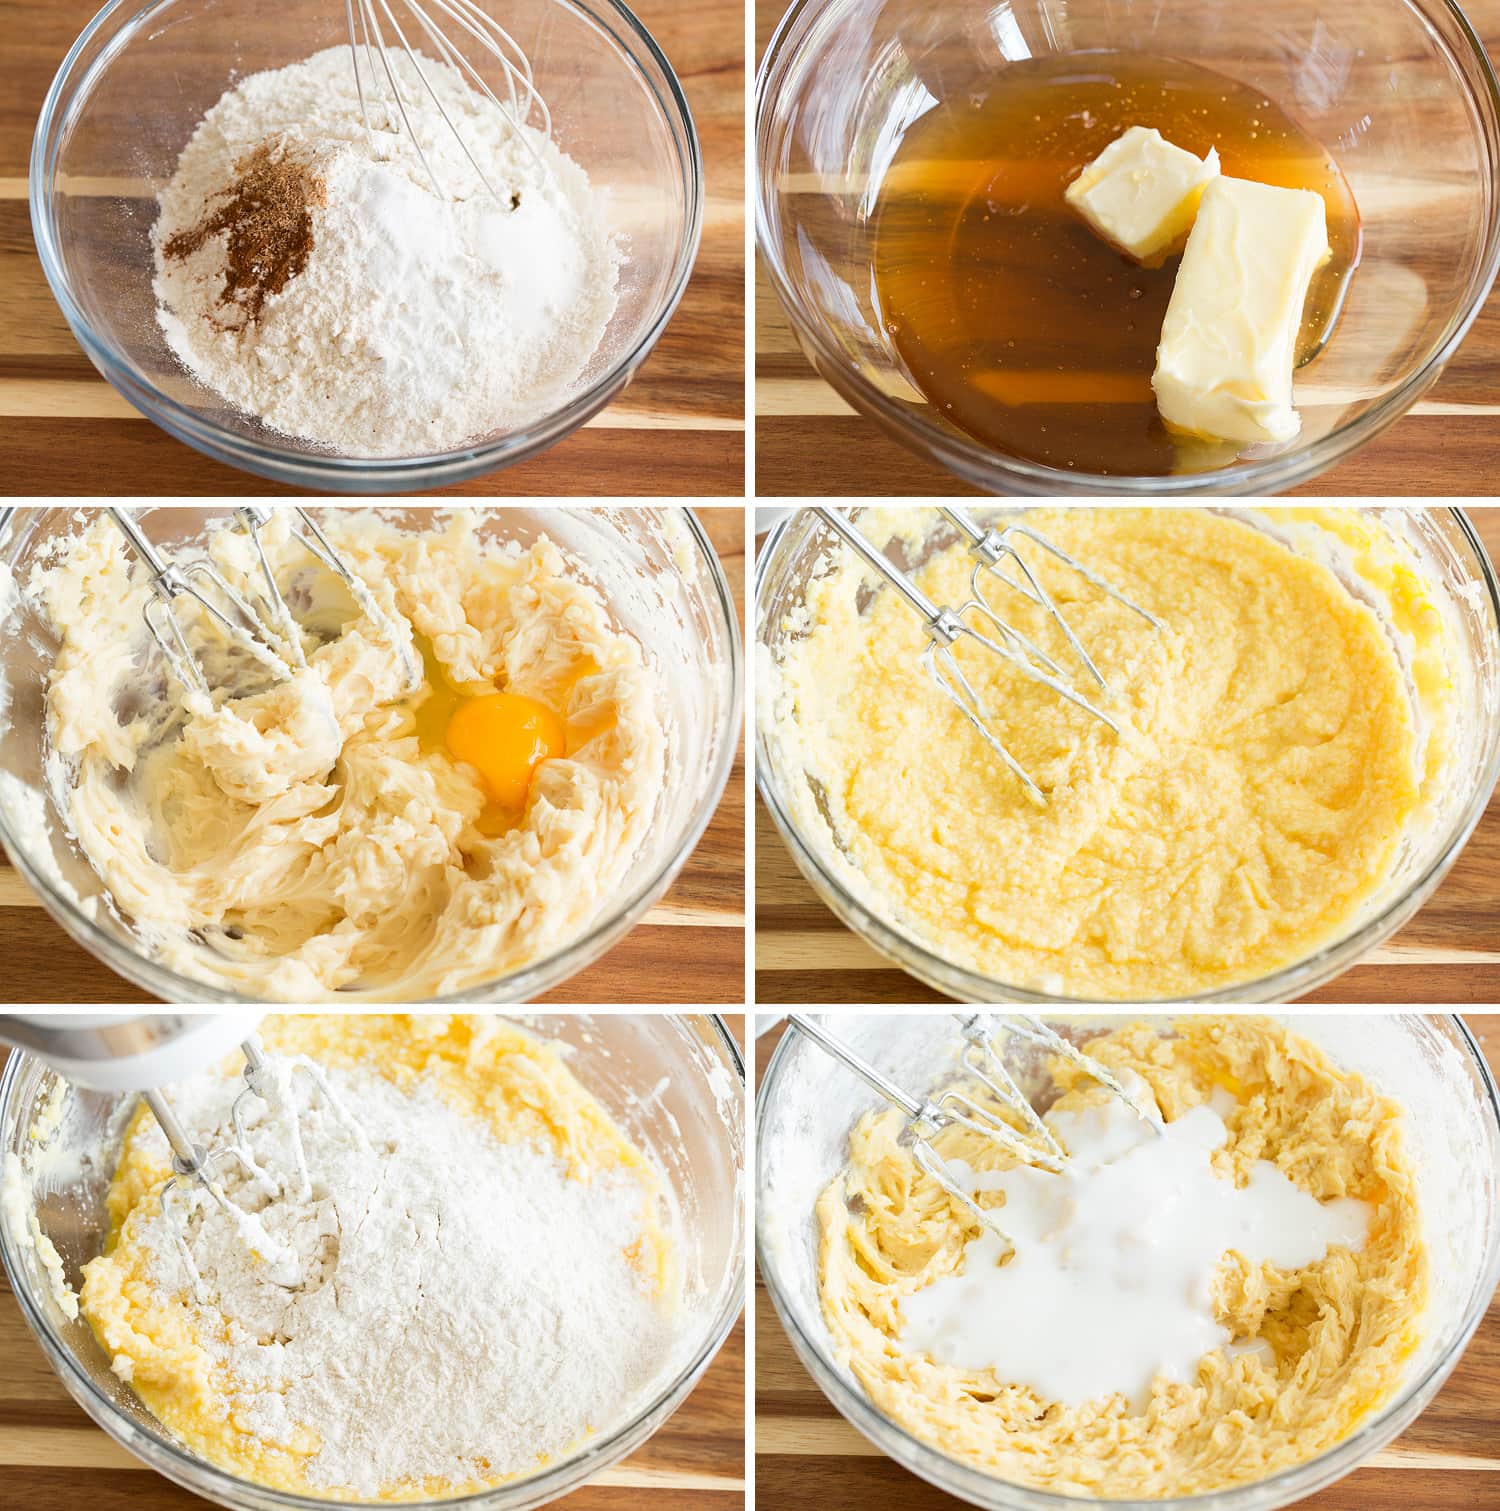 Six photos showing steps of making honey cake batter.